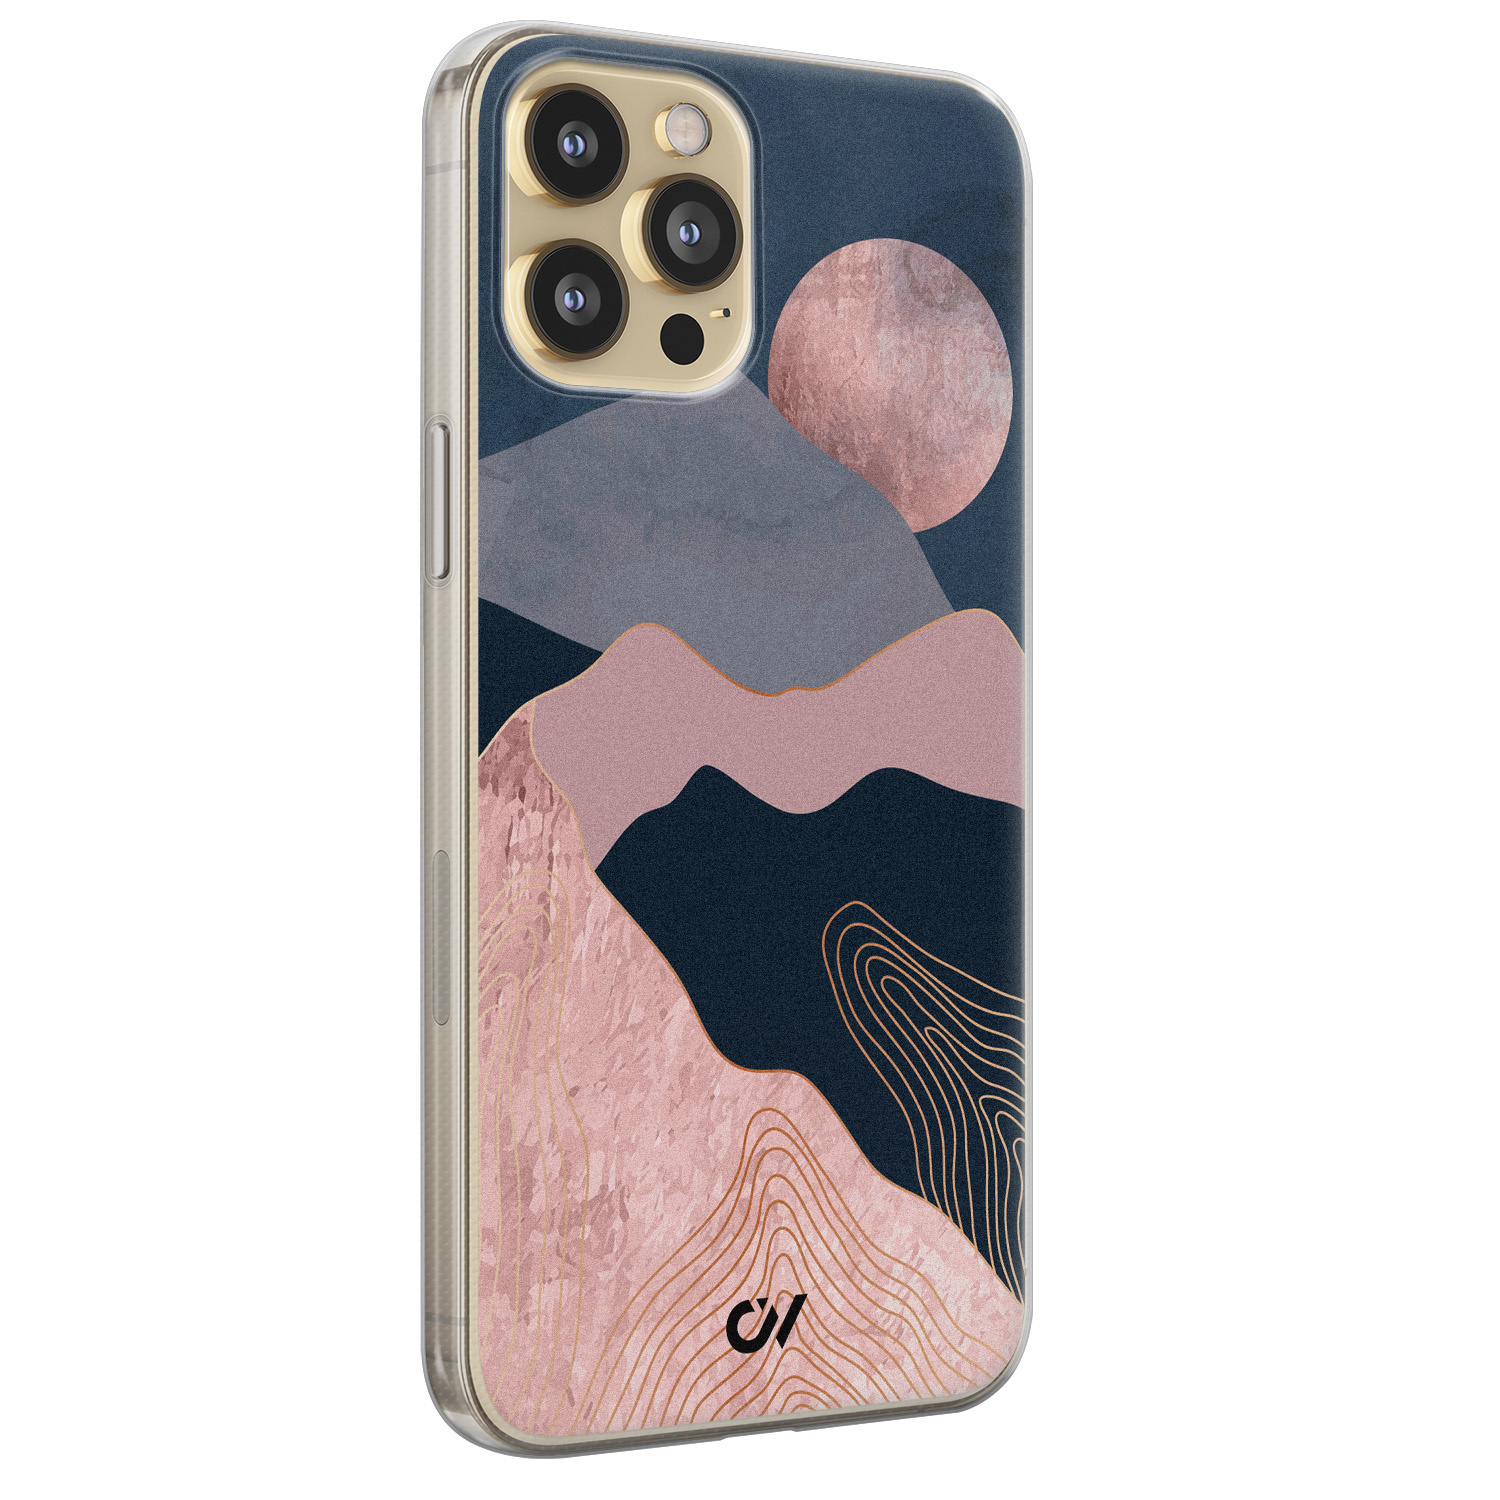 Casevibes iPhone 12 (Pro) hoesje siliconen - Landscape Rosegold